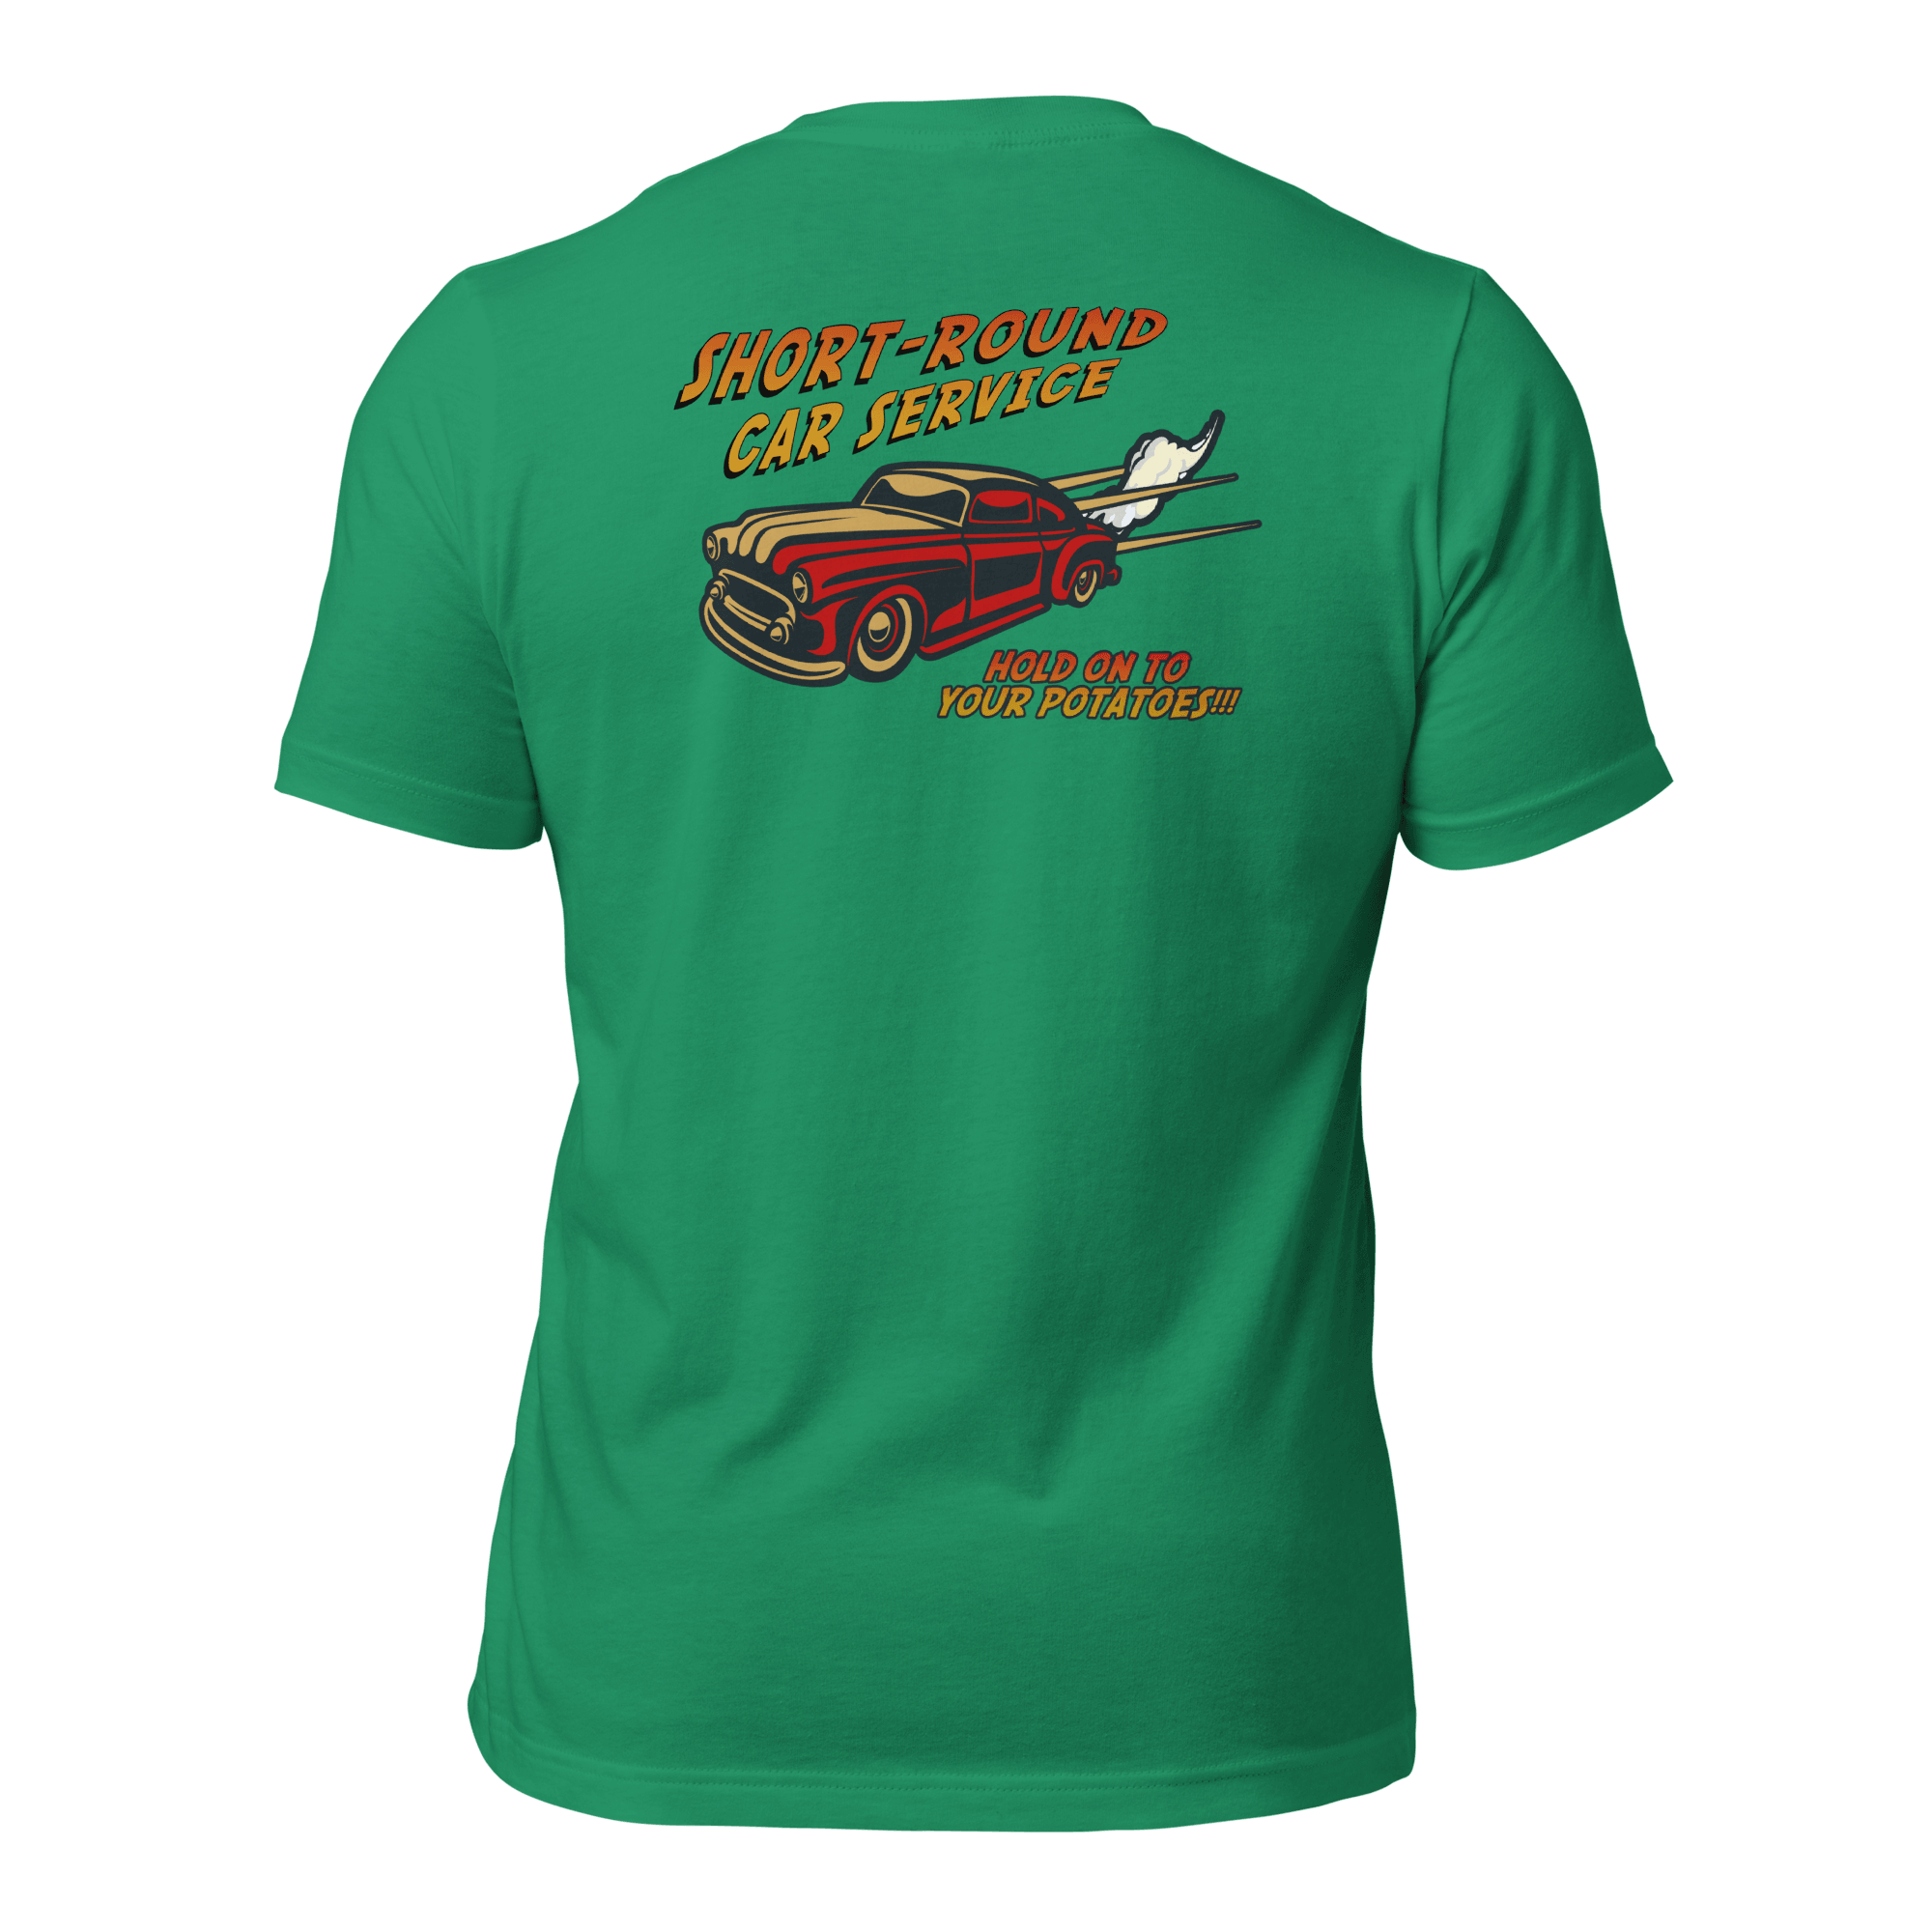 Short-Round Car Service Unisex t-shirt (BACK)